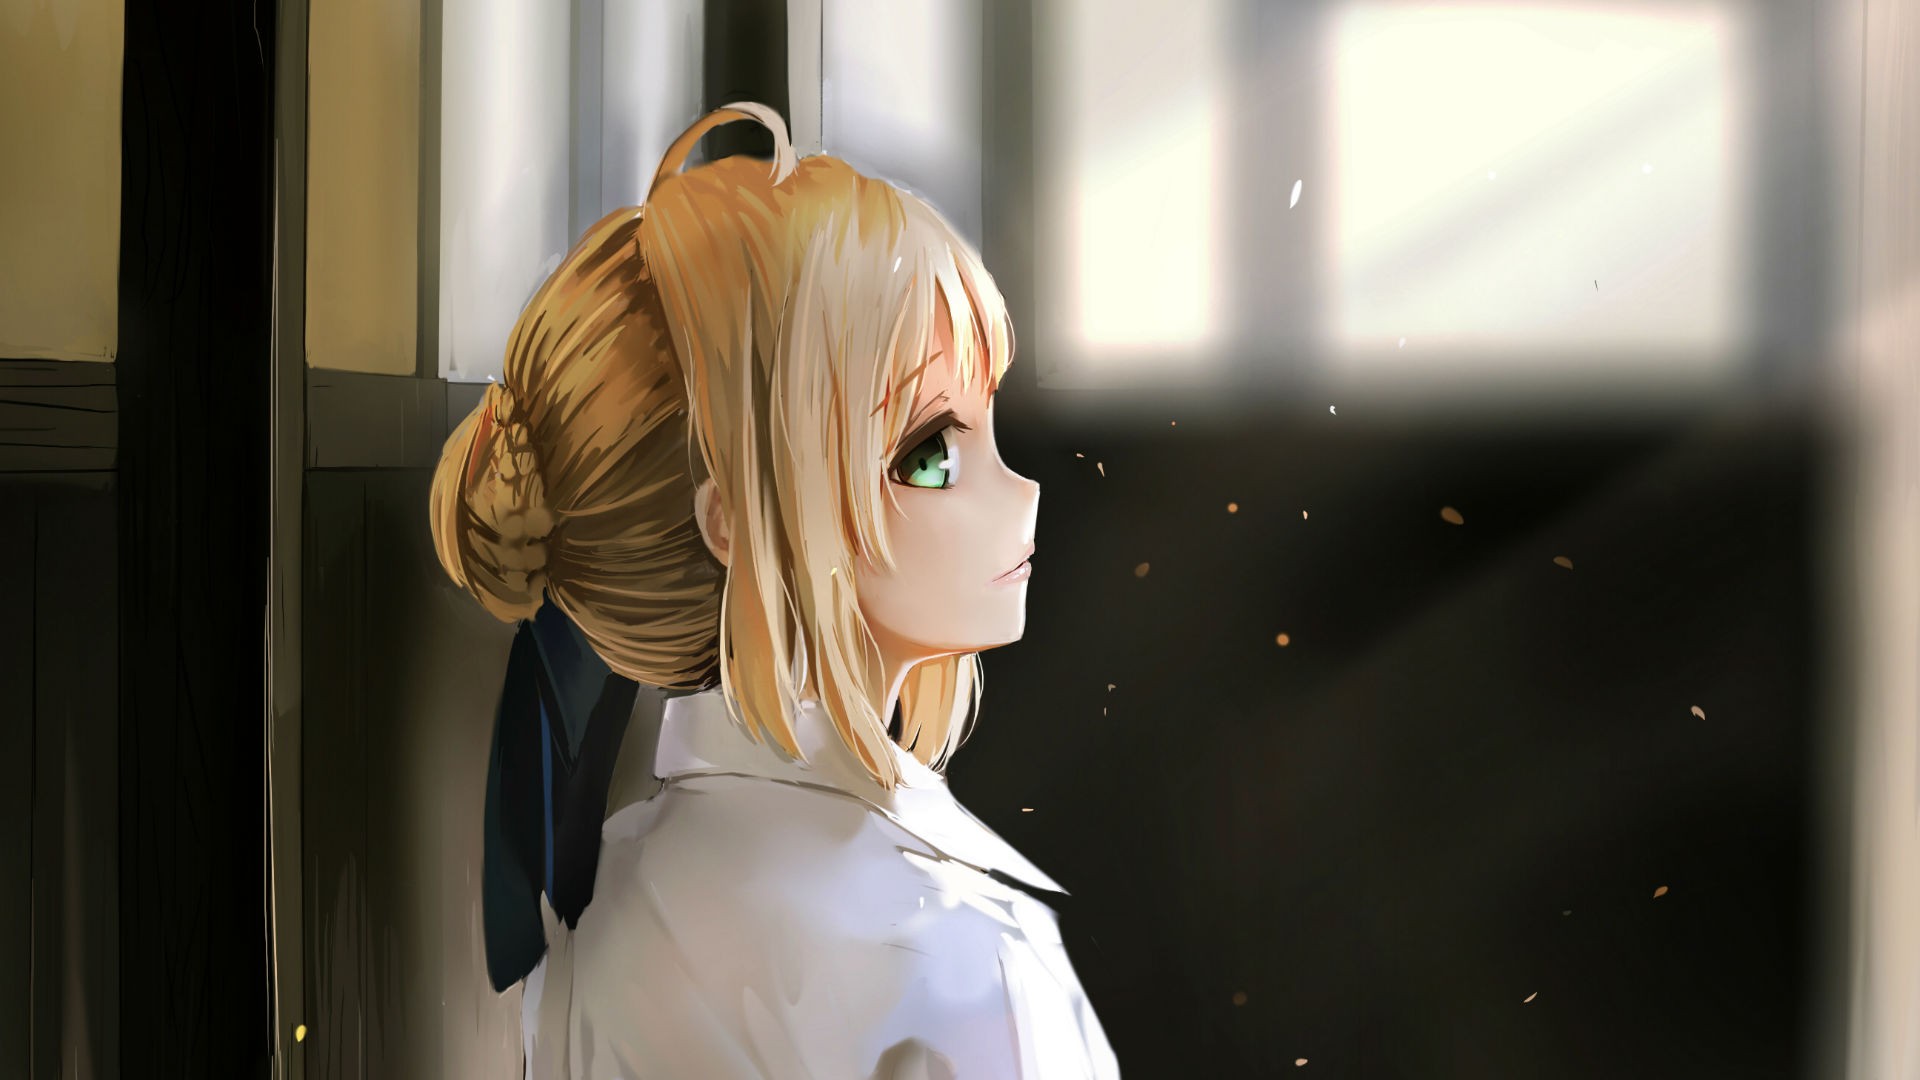 Anime 1920x1080 Saber ribbon hairbun blonde Fate series anime girls anime green eyes face Artoria Pendragon